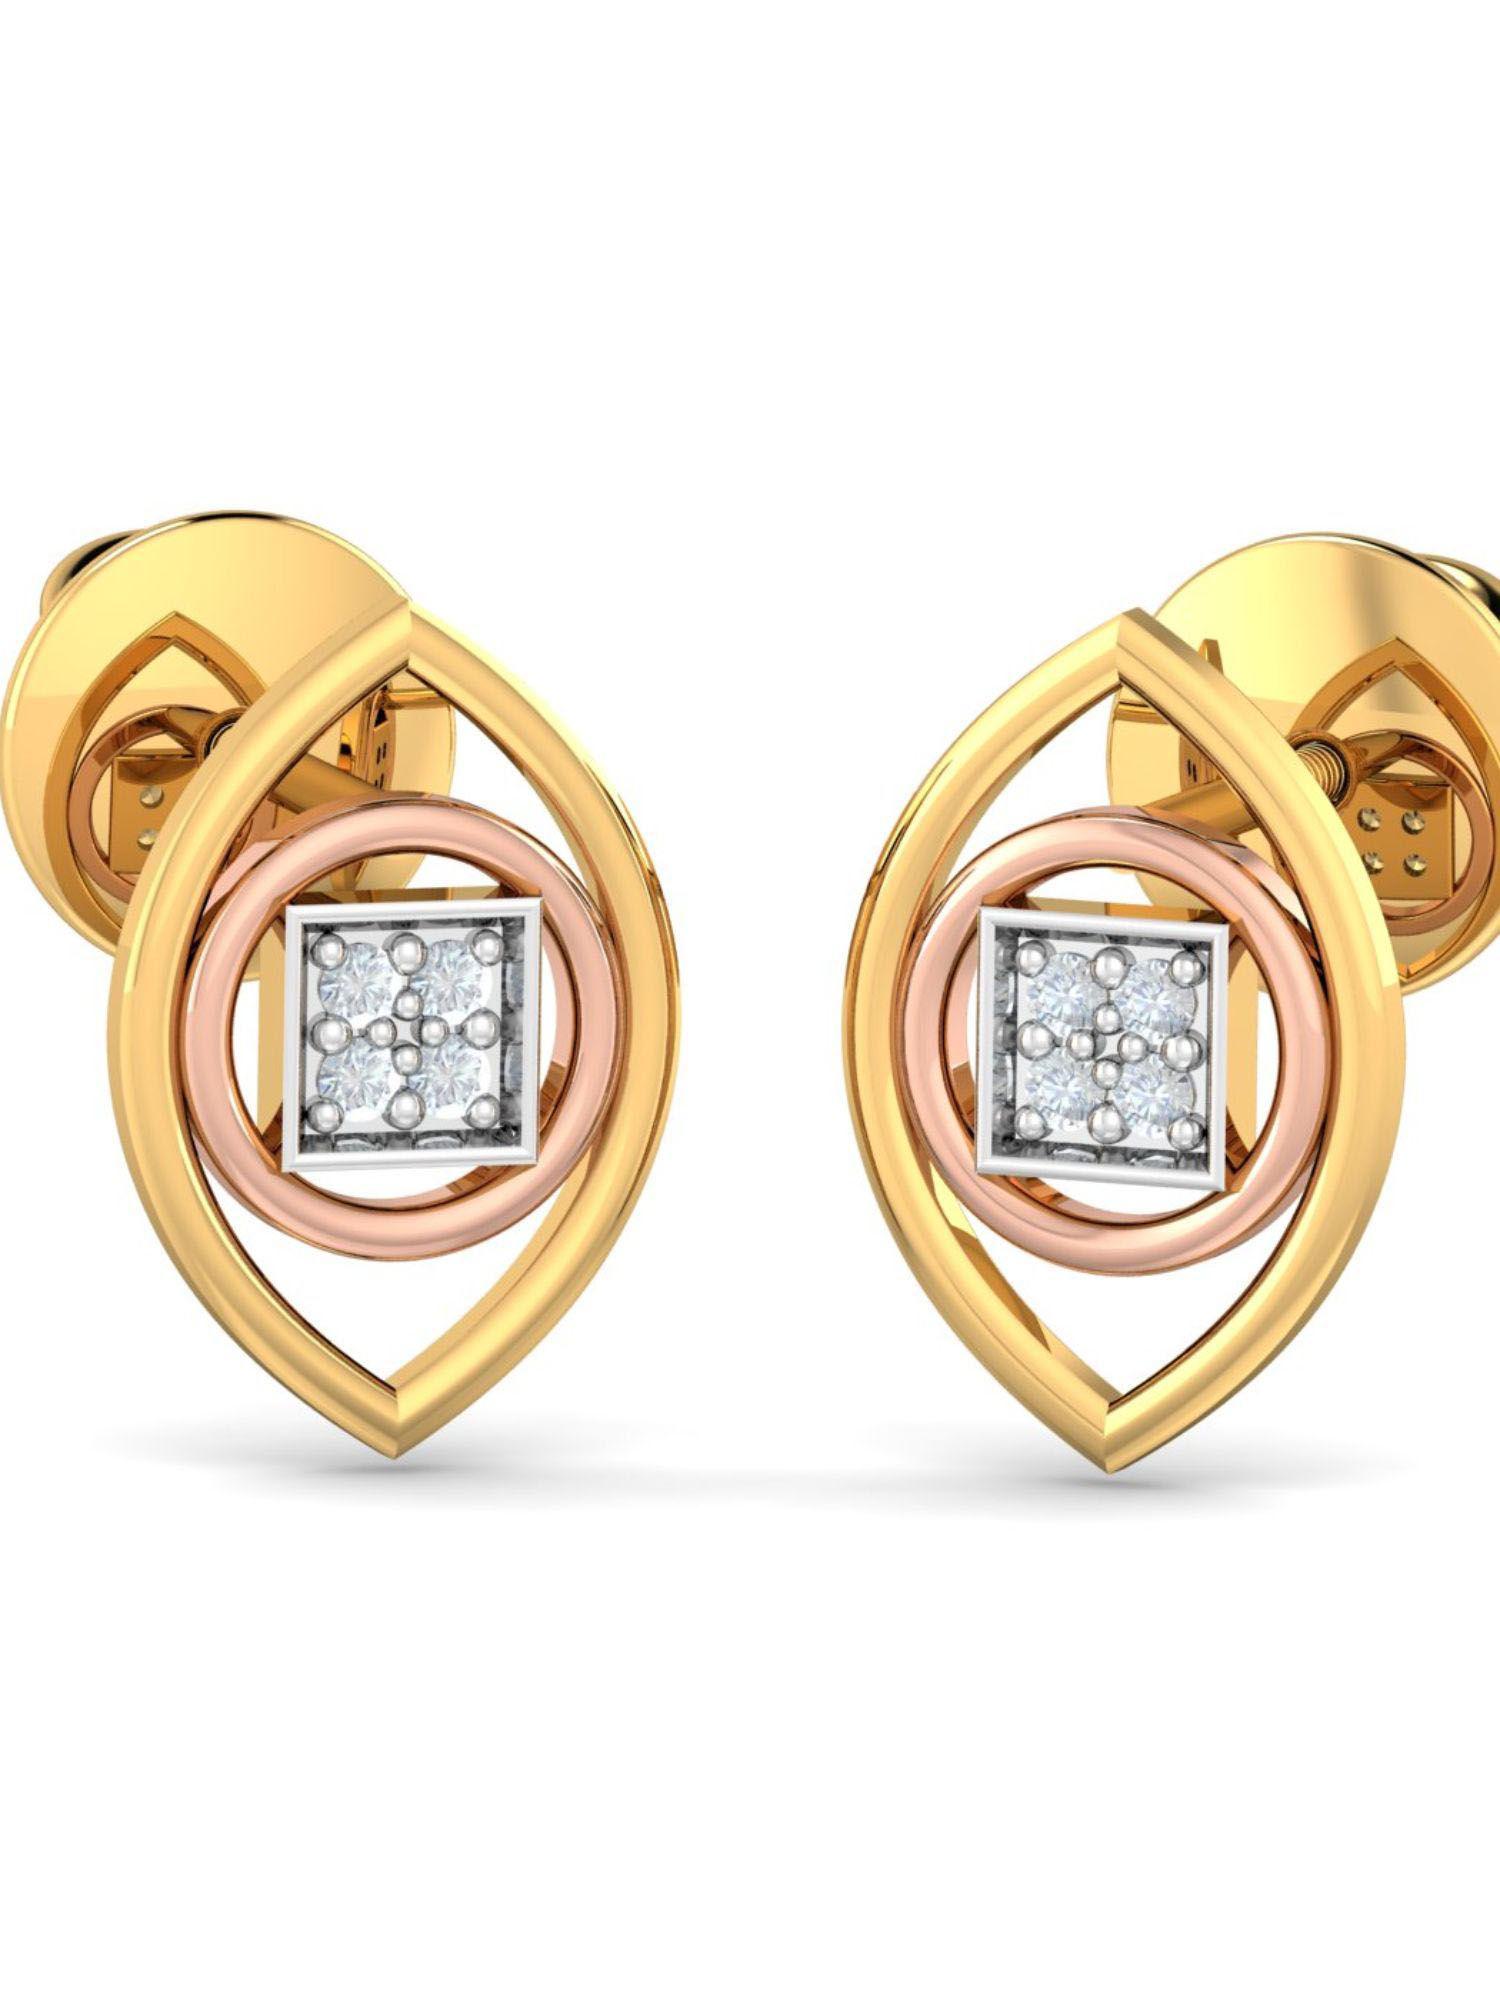 14k sabina stud earrings for women and girls